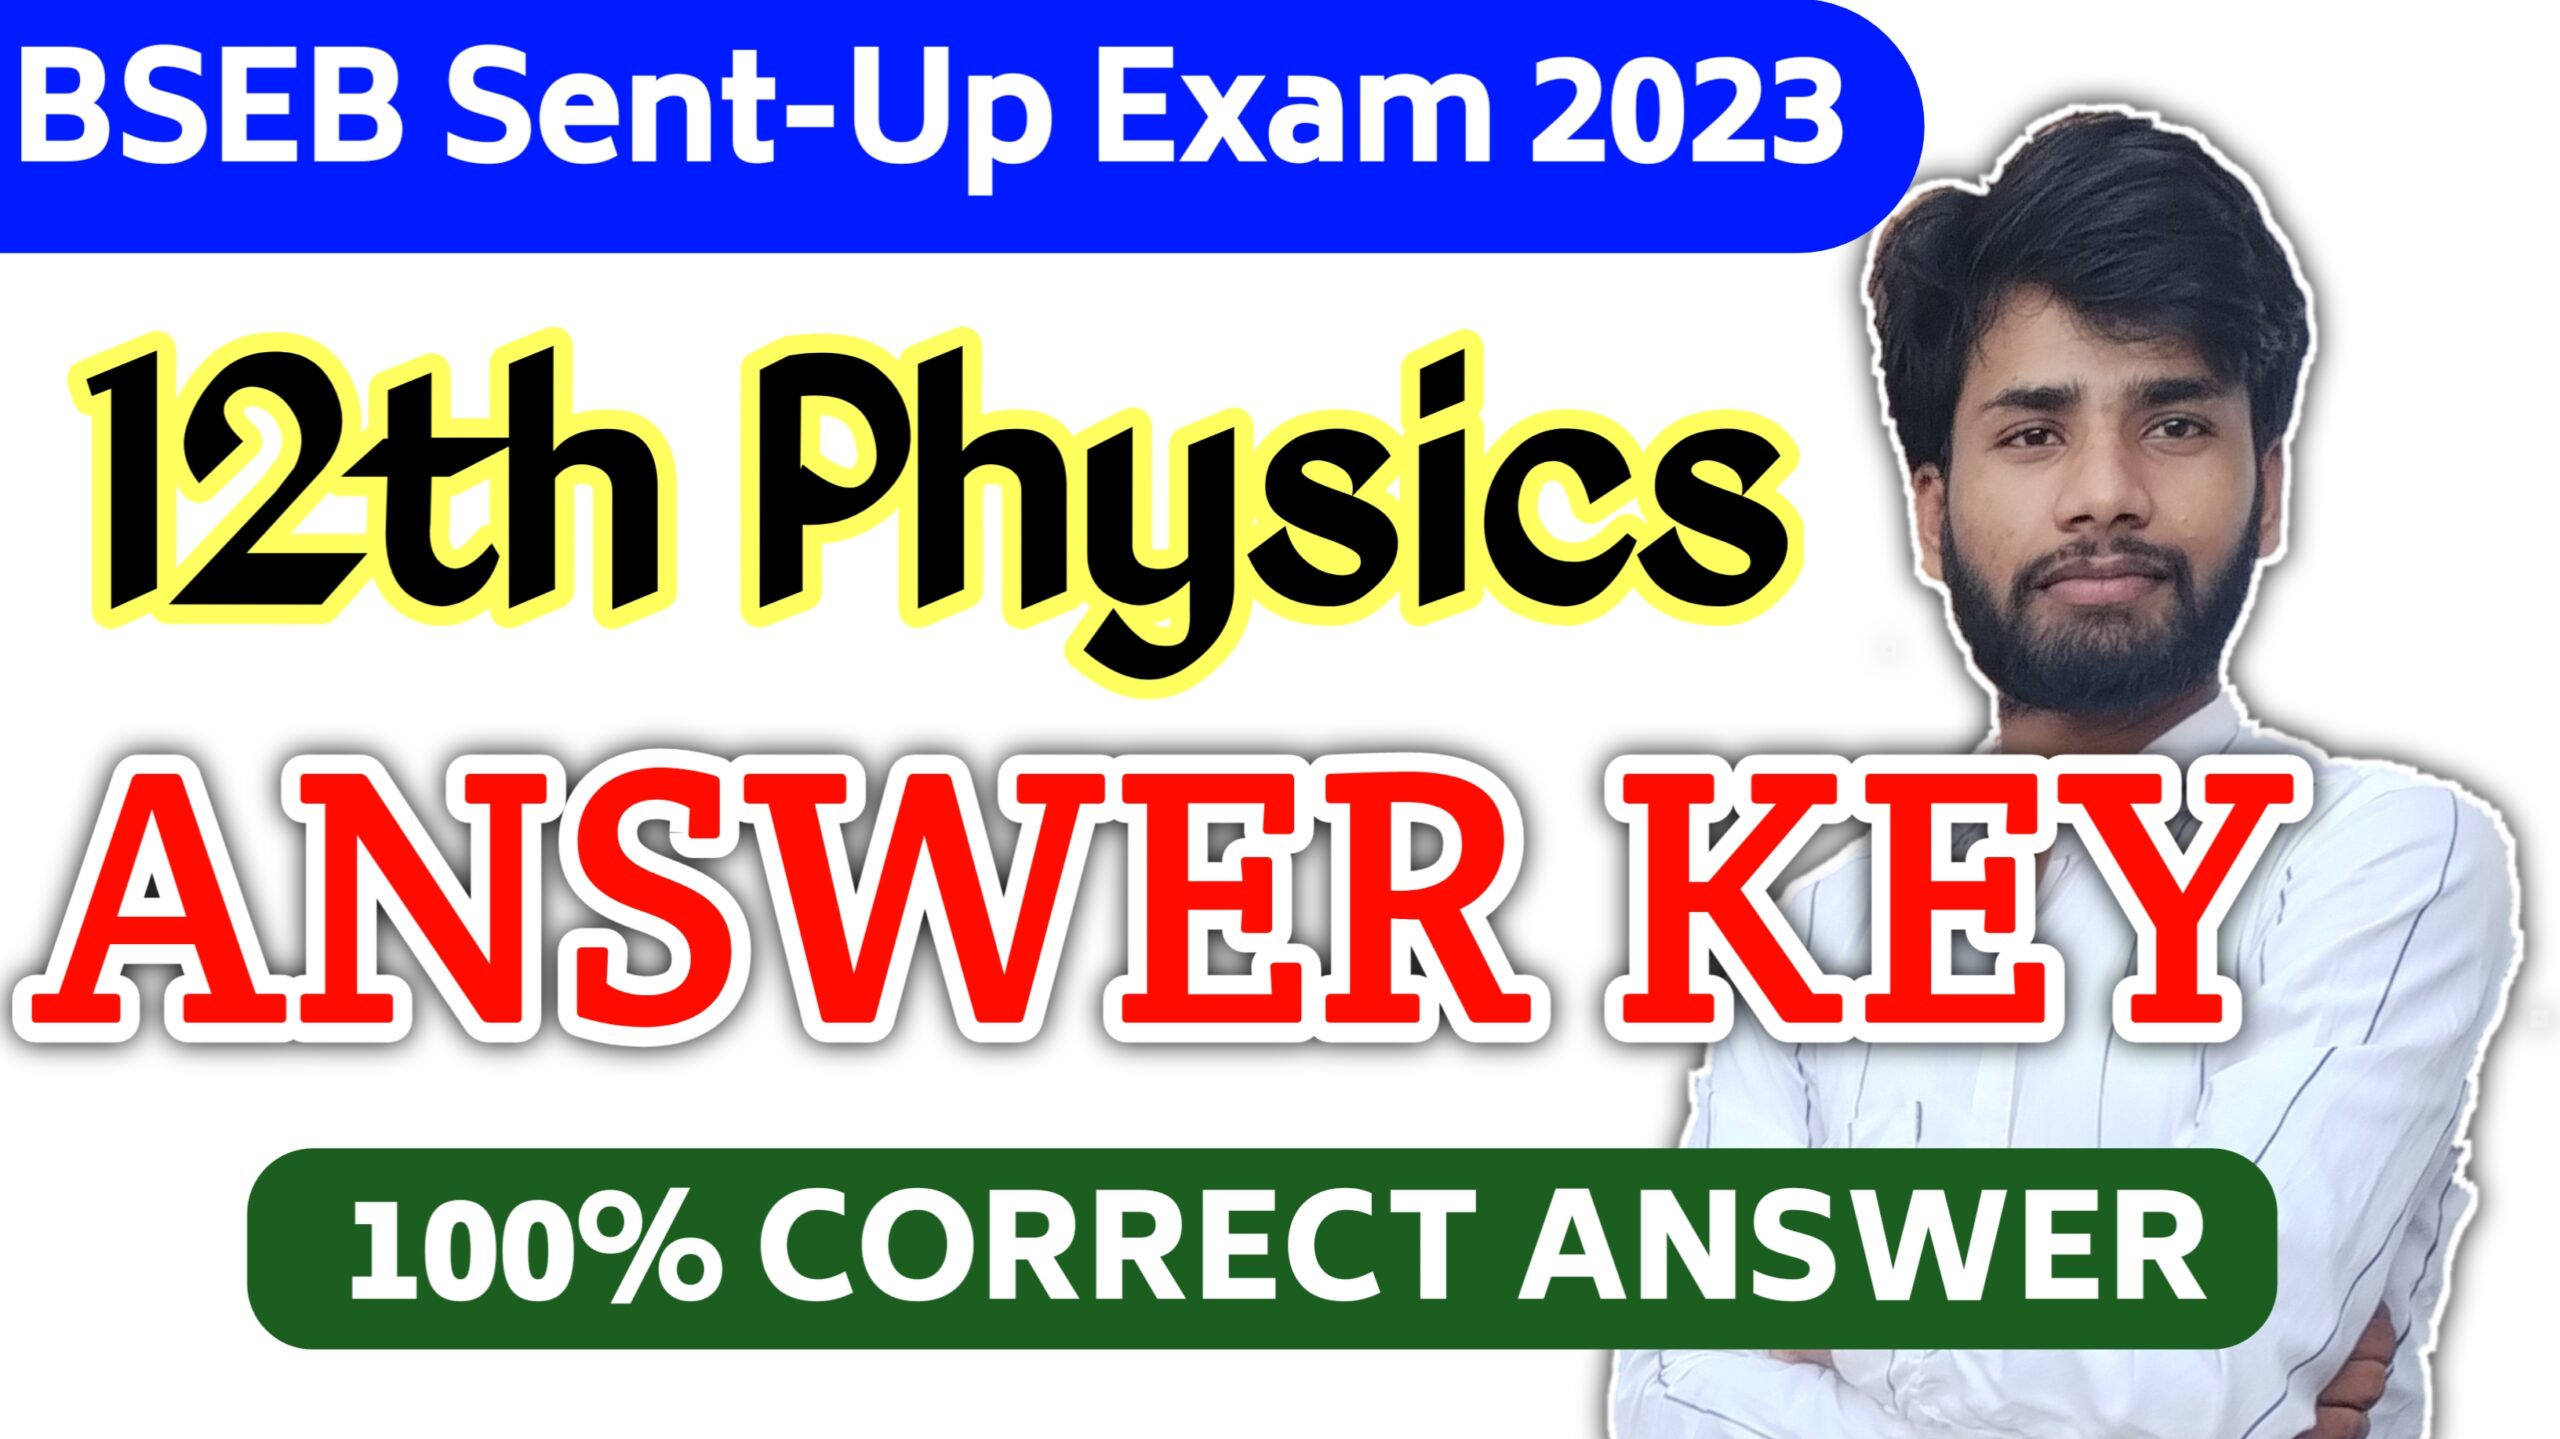 Bihar Board Class 12th Physics Sent-Up Exam 2023